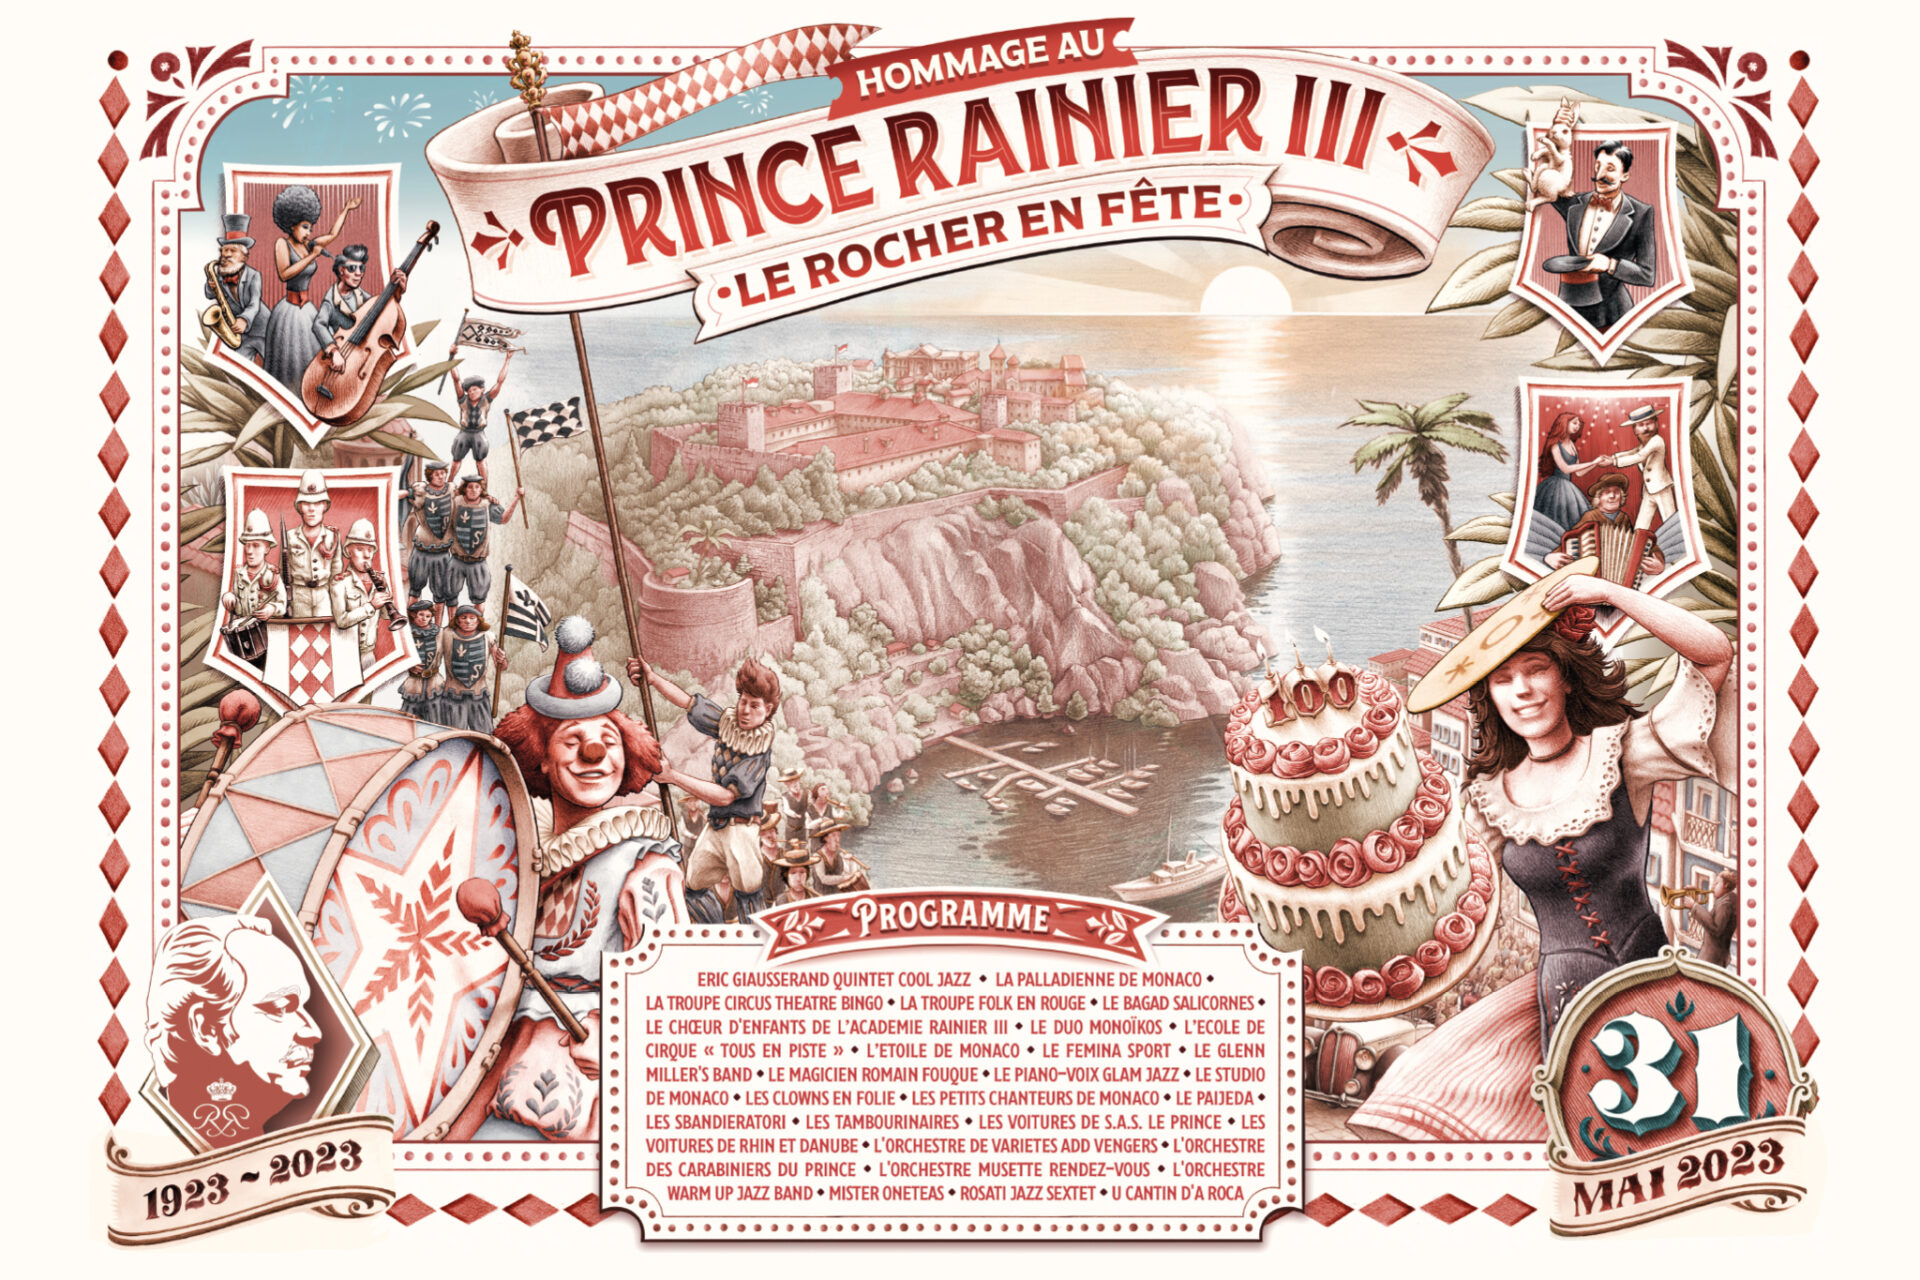 Prince Rainier III - Rainier 3 chess tournament